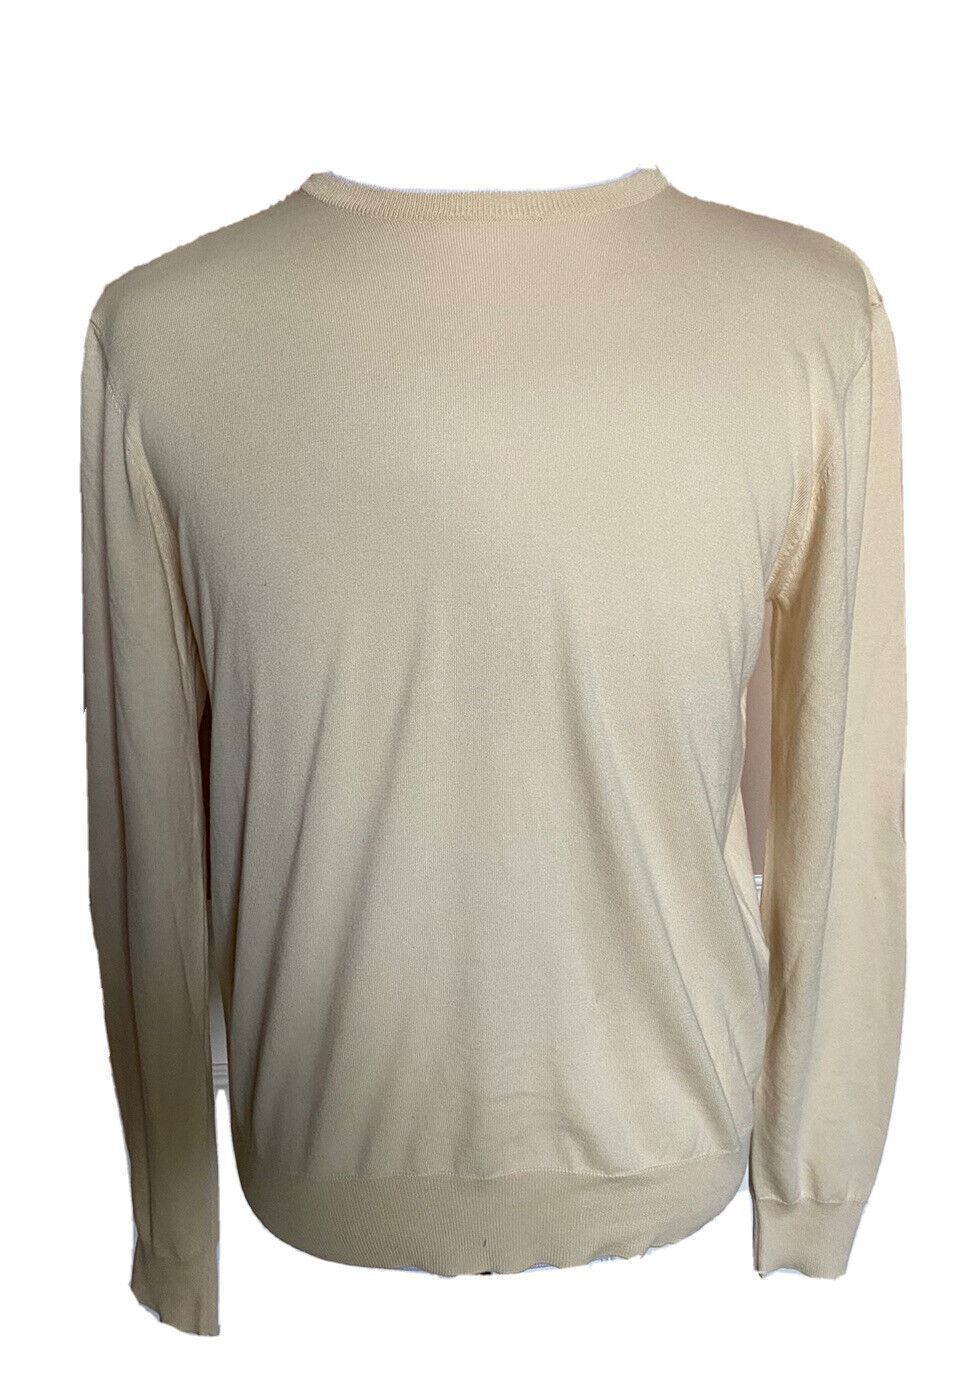 Polo Ralph Lauren Purple Label Men's Cotton Winter Cream Sweater L IT NWT $695